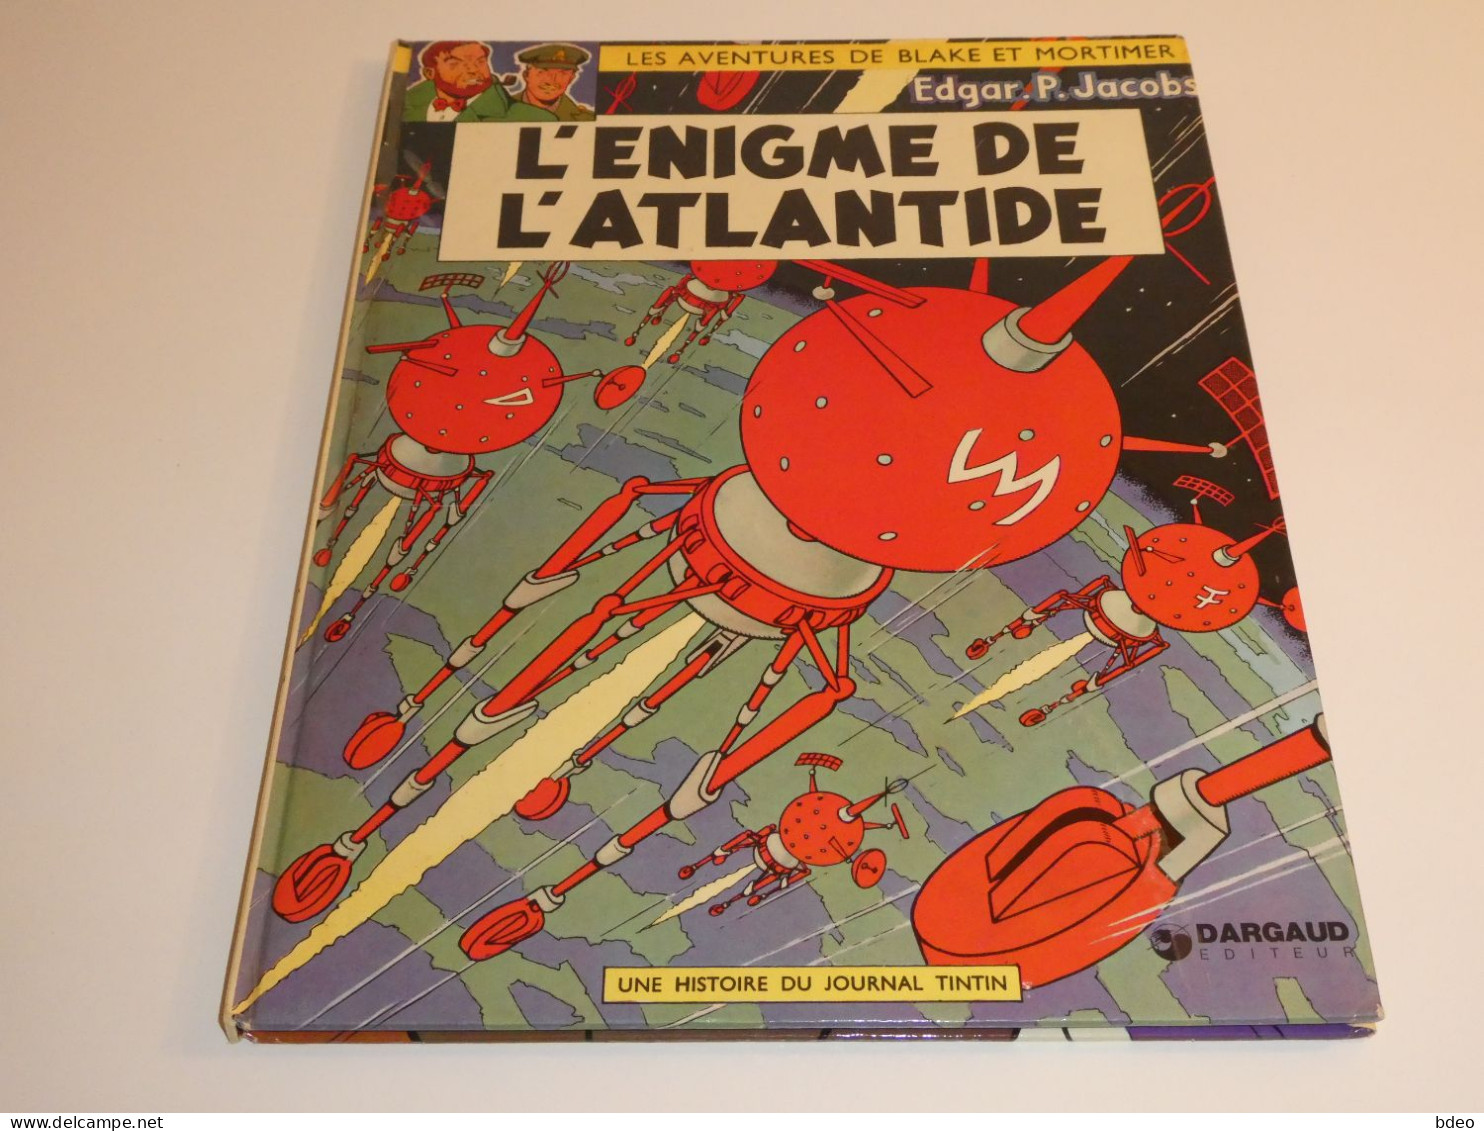 BLAKE ET MORTIMER / L'ENIGME DE L'ATLANTIDE / 1974 / BE - Original Edition - French